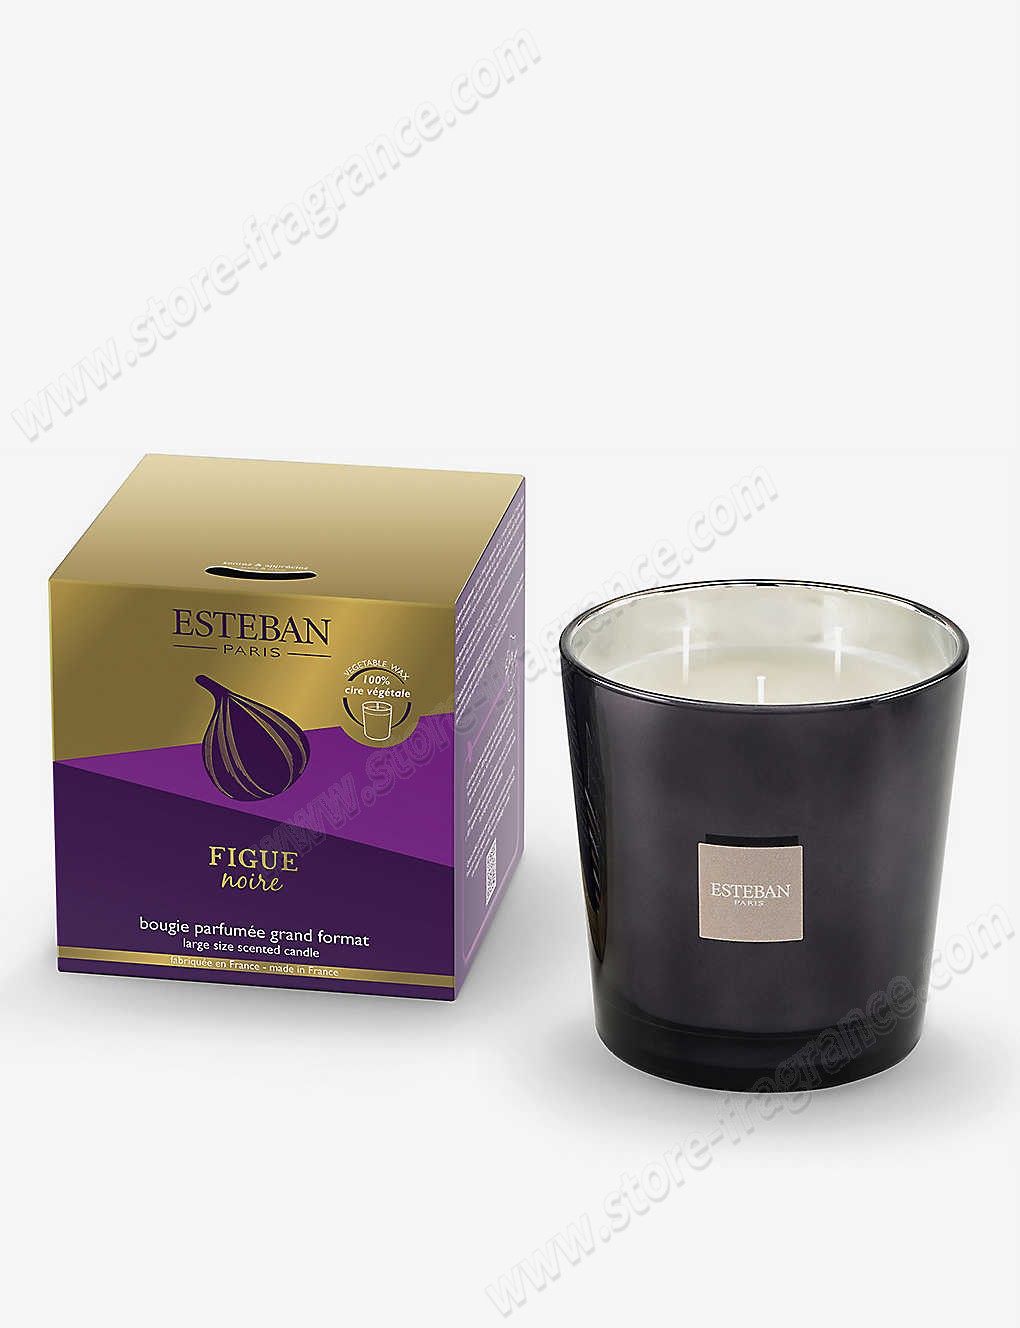 ESTEBAN/Figue Noire scented candle 450g ✿ Discount Store - ESTEBAN/Figue Noire scented candle 450g ✿ Discount Store